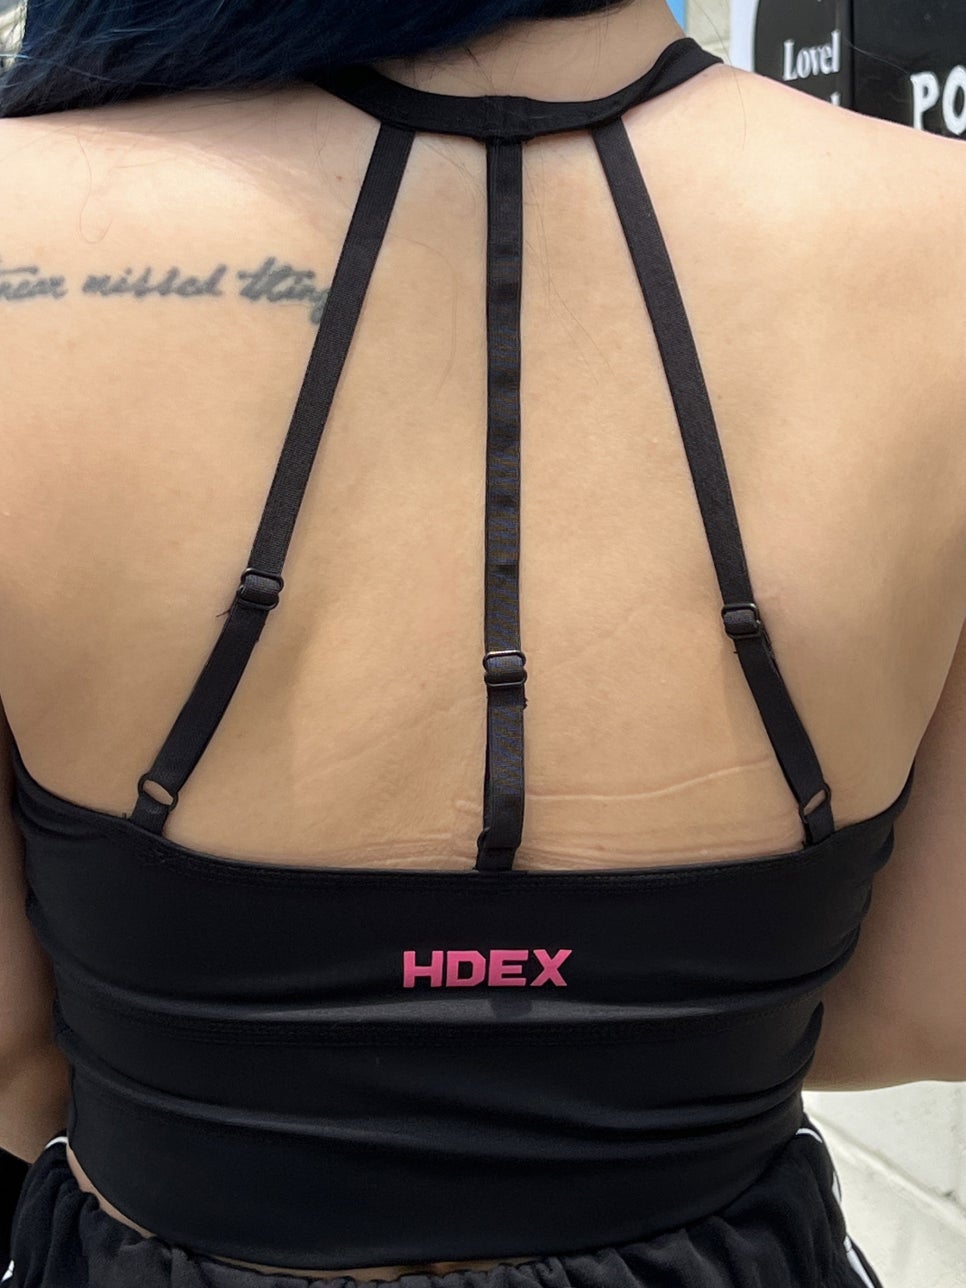 HDEX 에이치덱스 X 바비 콜라보 짐웨어 여자운동복  추천 !